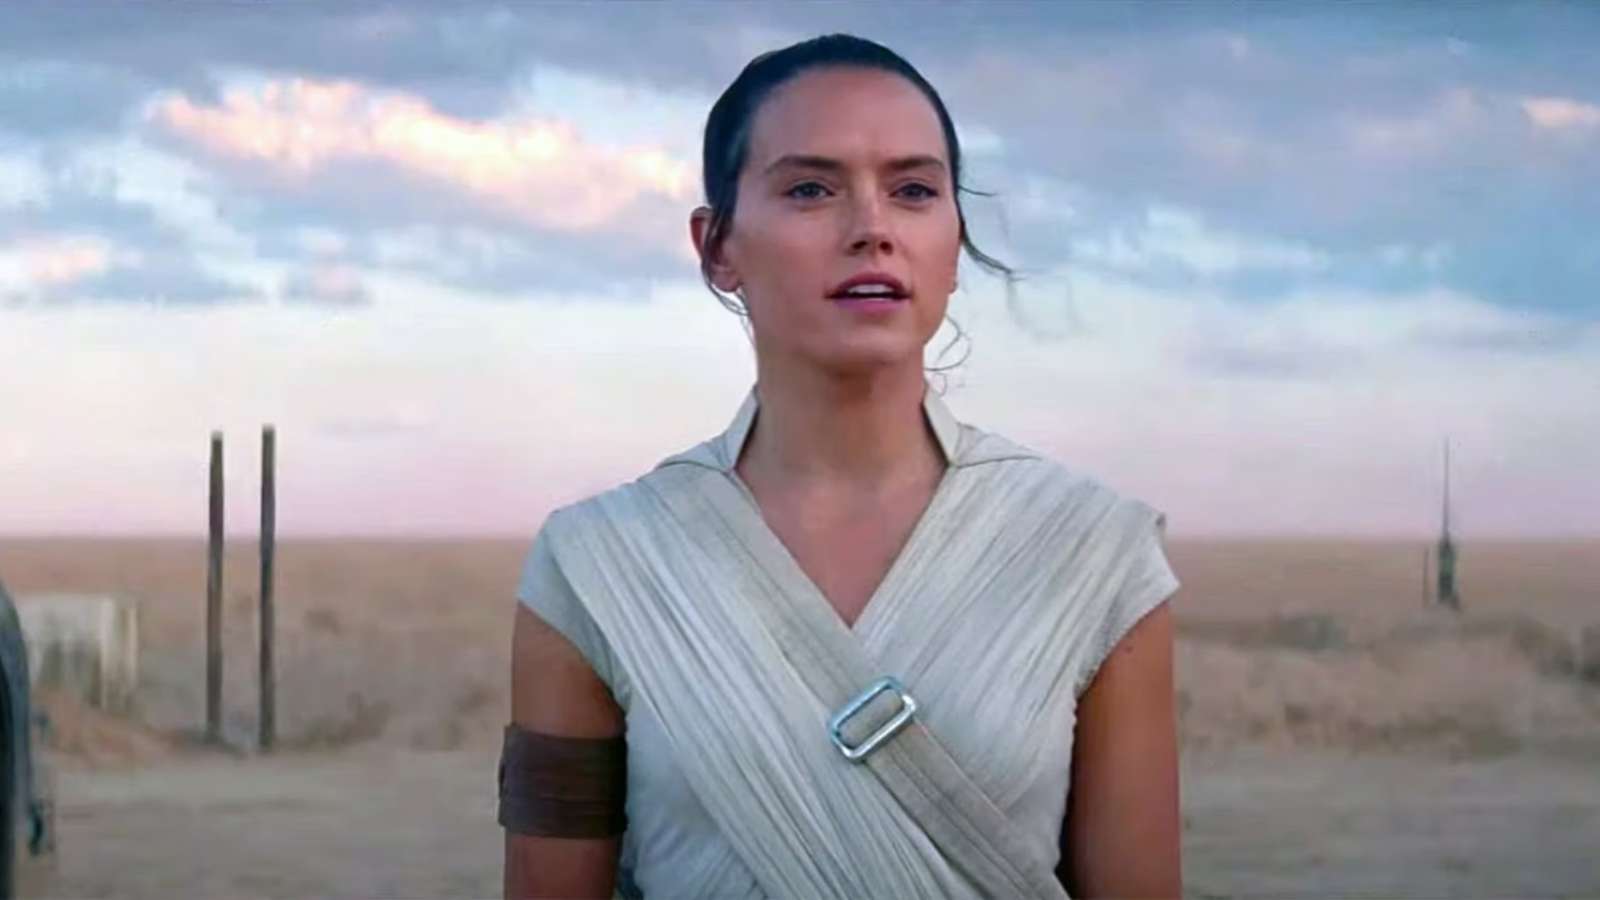 Disney Is Erasing Rey Skywalker From Star Wars? Here's What We Know ...